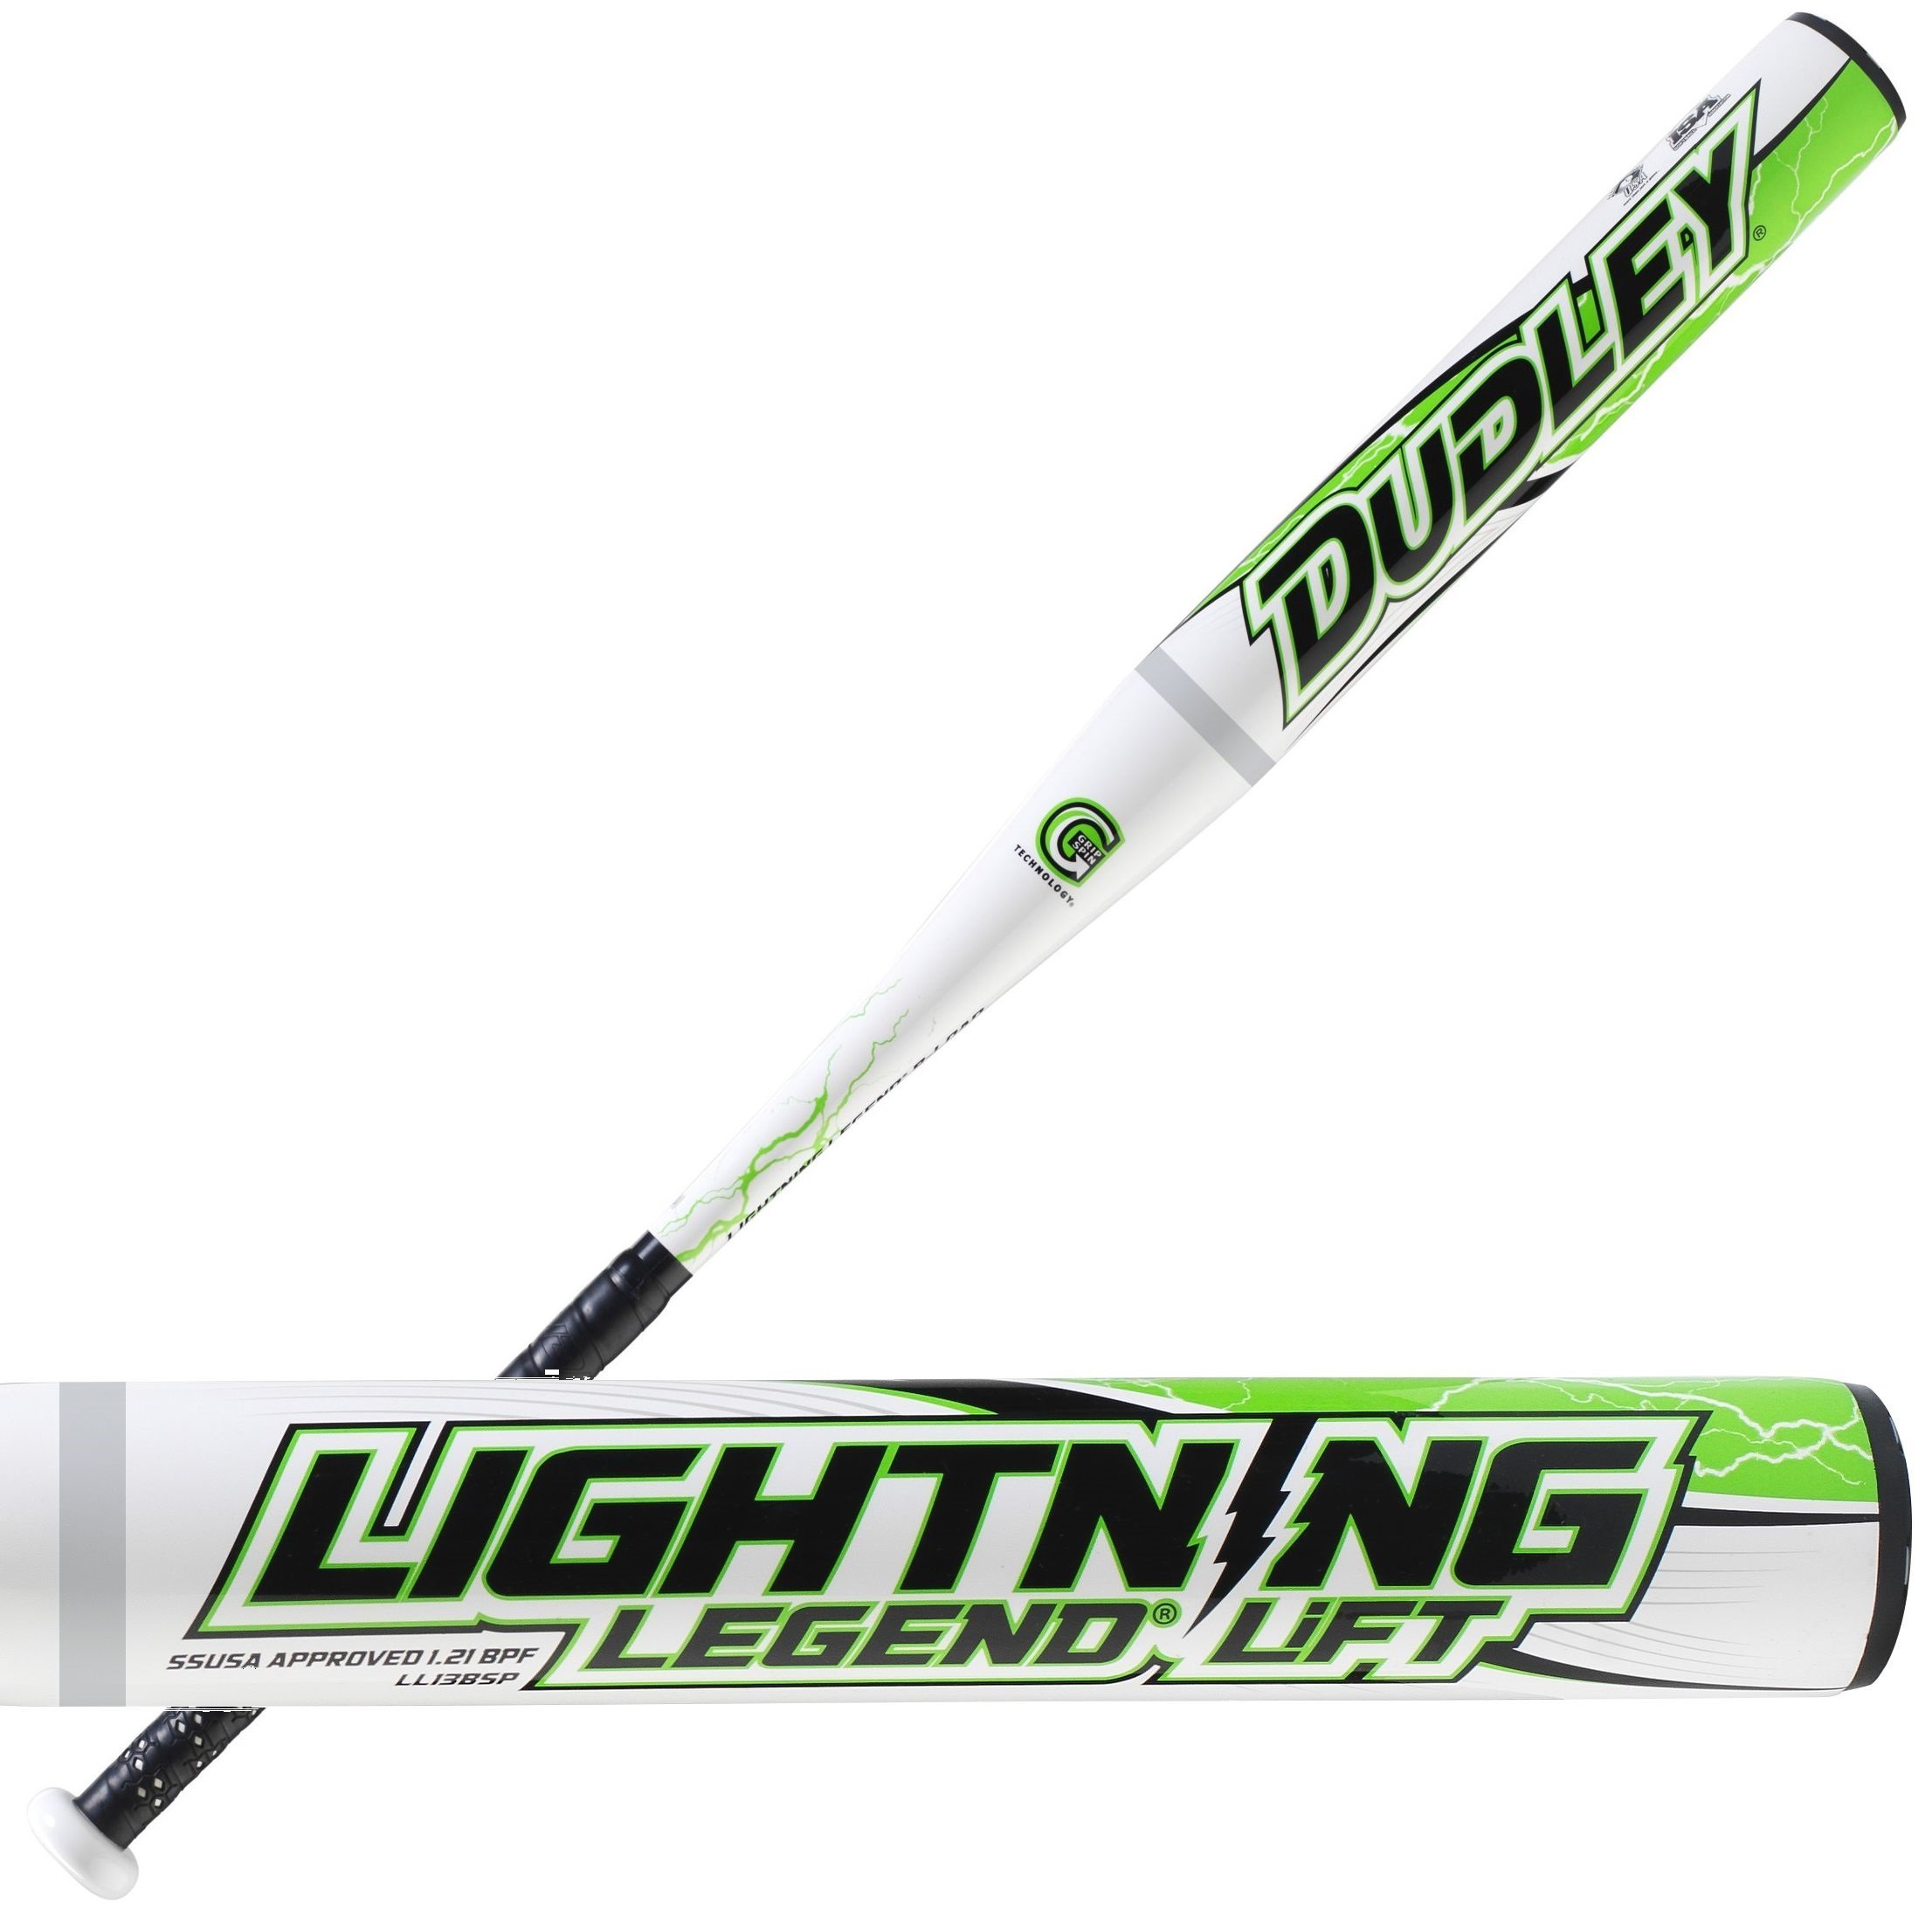 Dudley Lightning Legend Lift Endloaded 25oz Softball Bat 